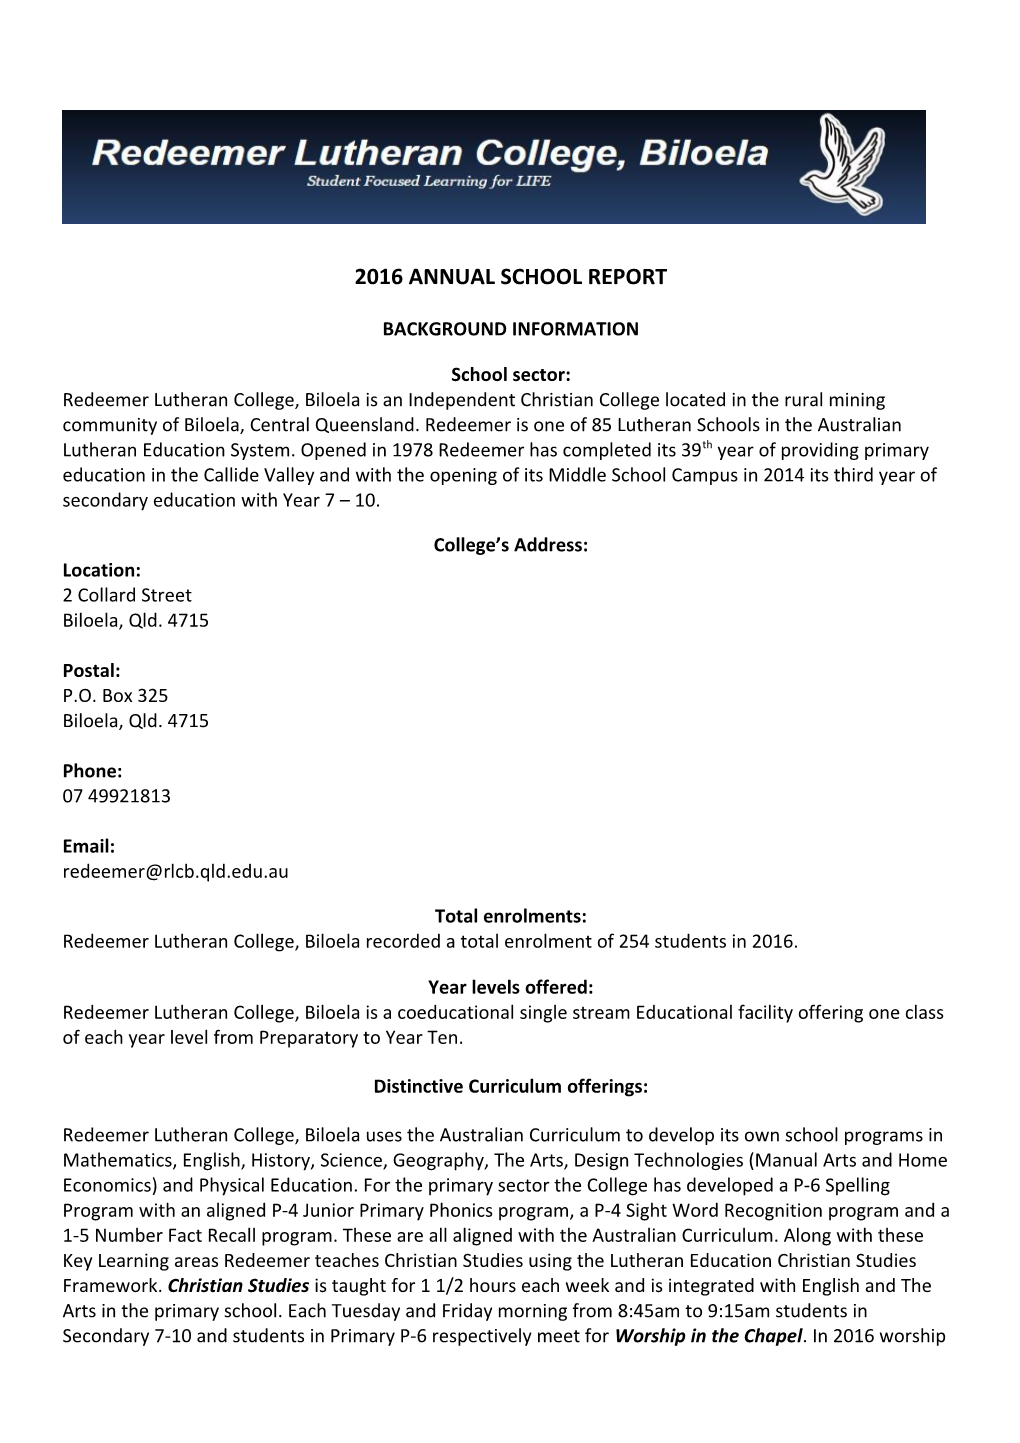 2016 Annual School Report